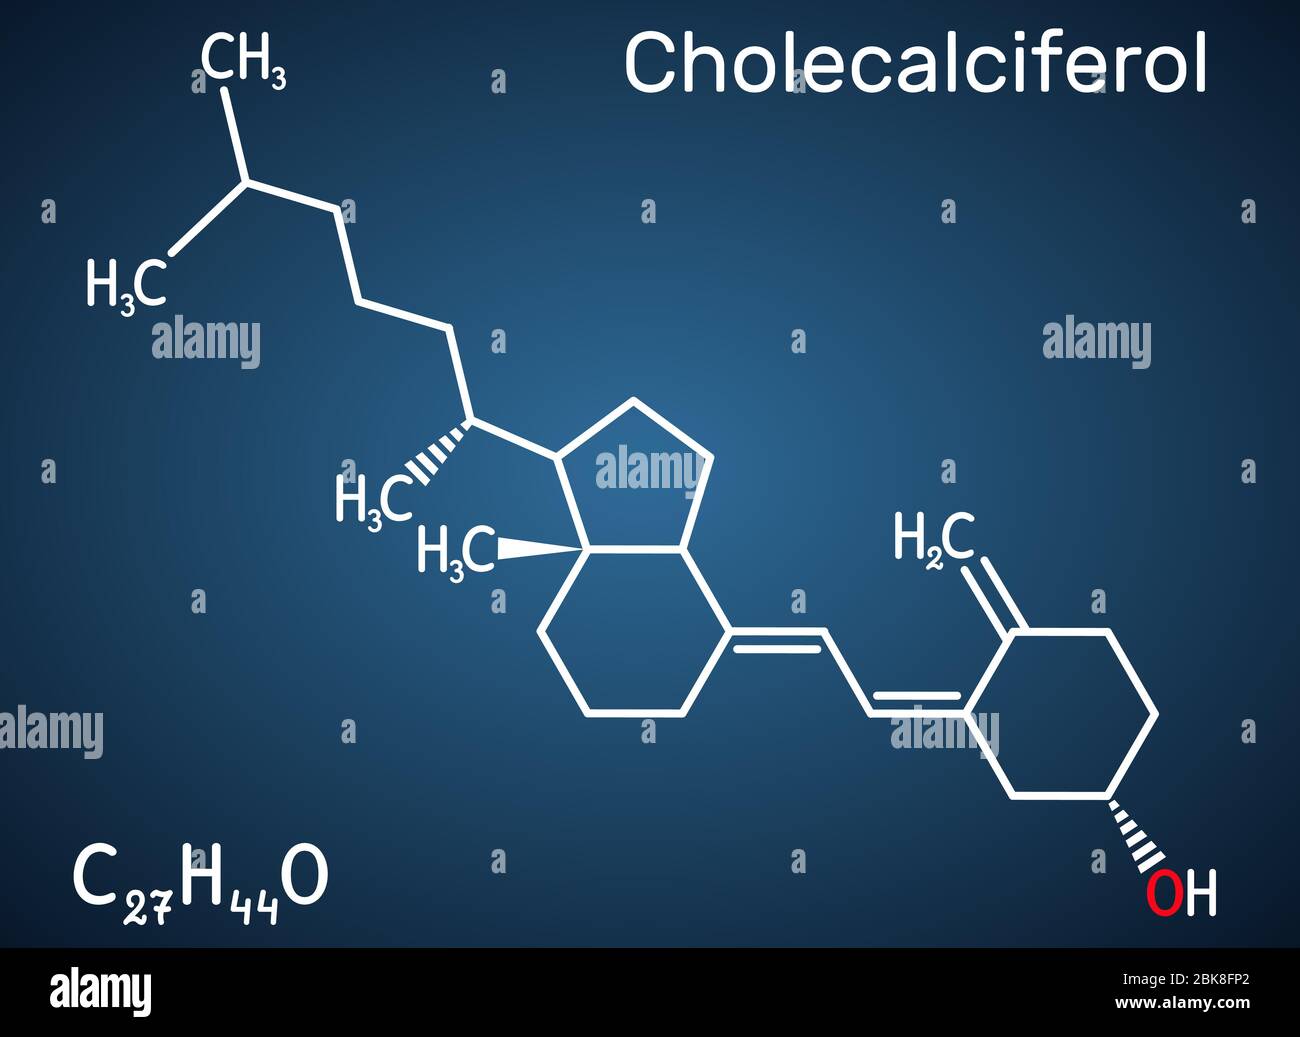 Cholecalciferol, colecalciferol, vitamin D3, C27H44O molecule. Structural chemical formula on the dark blue background. Vector illustration Stock Vector